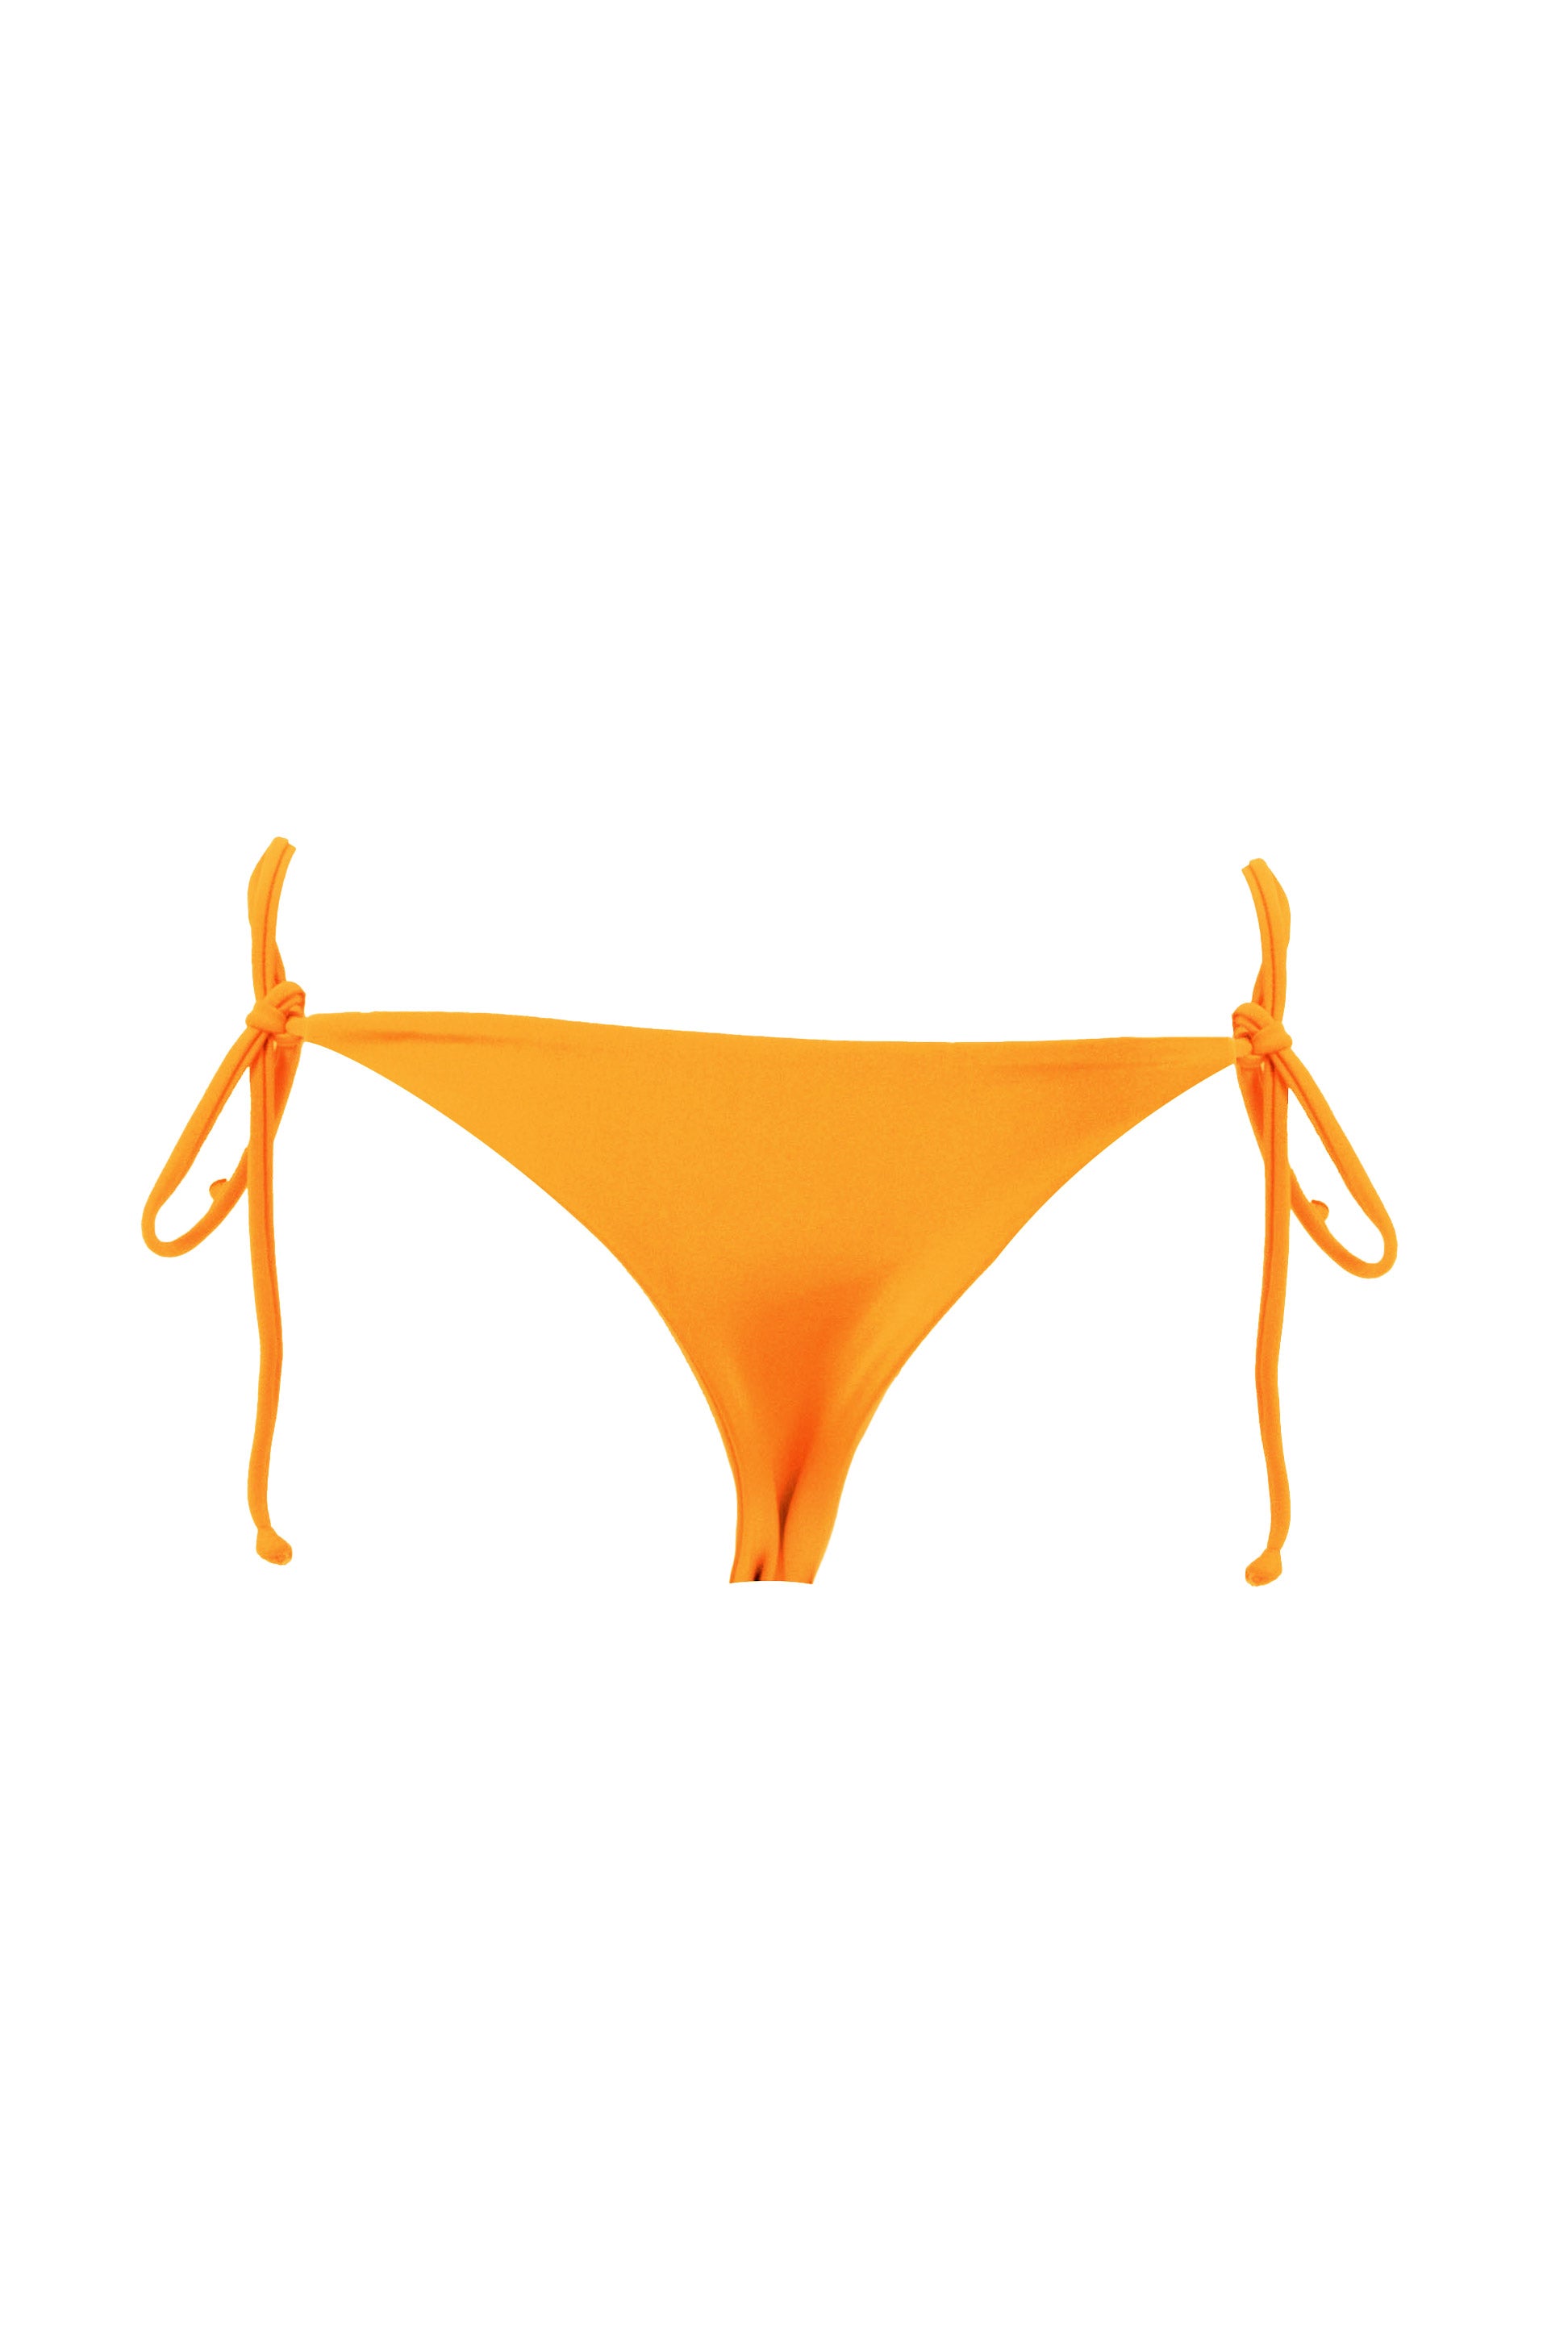 Good Morning Mango // Brazlian Whale Tail Side-Tie Bottom